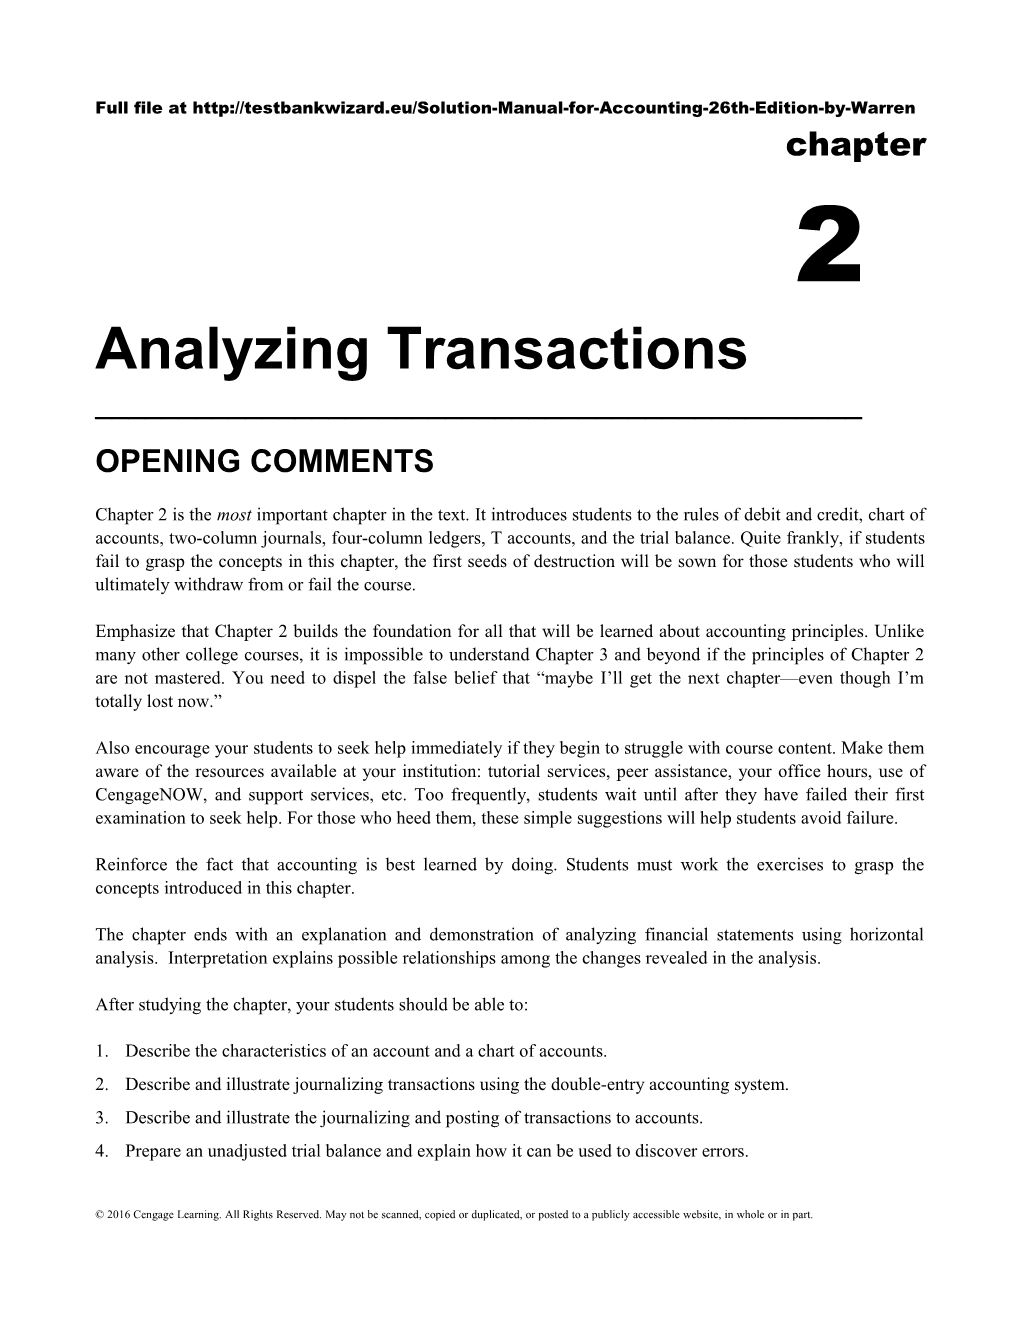 Analyzing Transactions